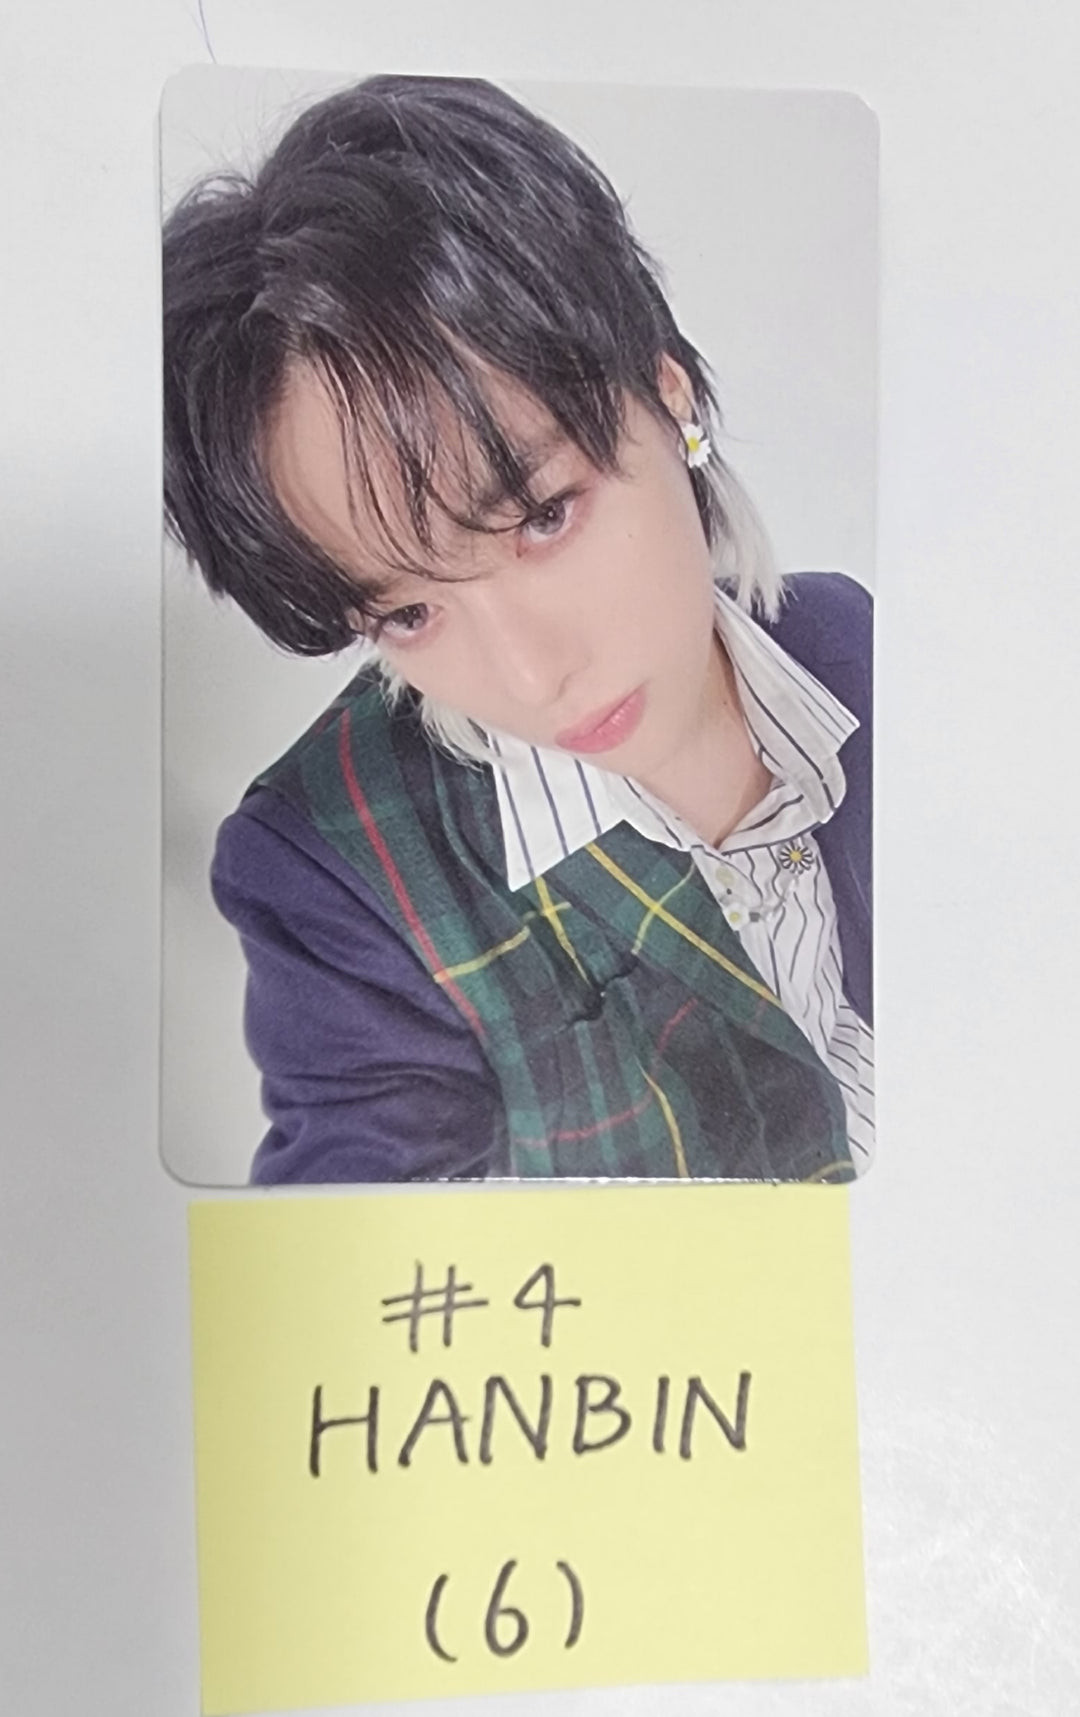 TEMPEST "폭풍전야" 4th mini album - Official Photocard, Postcard, Topper